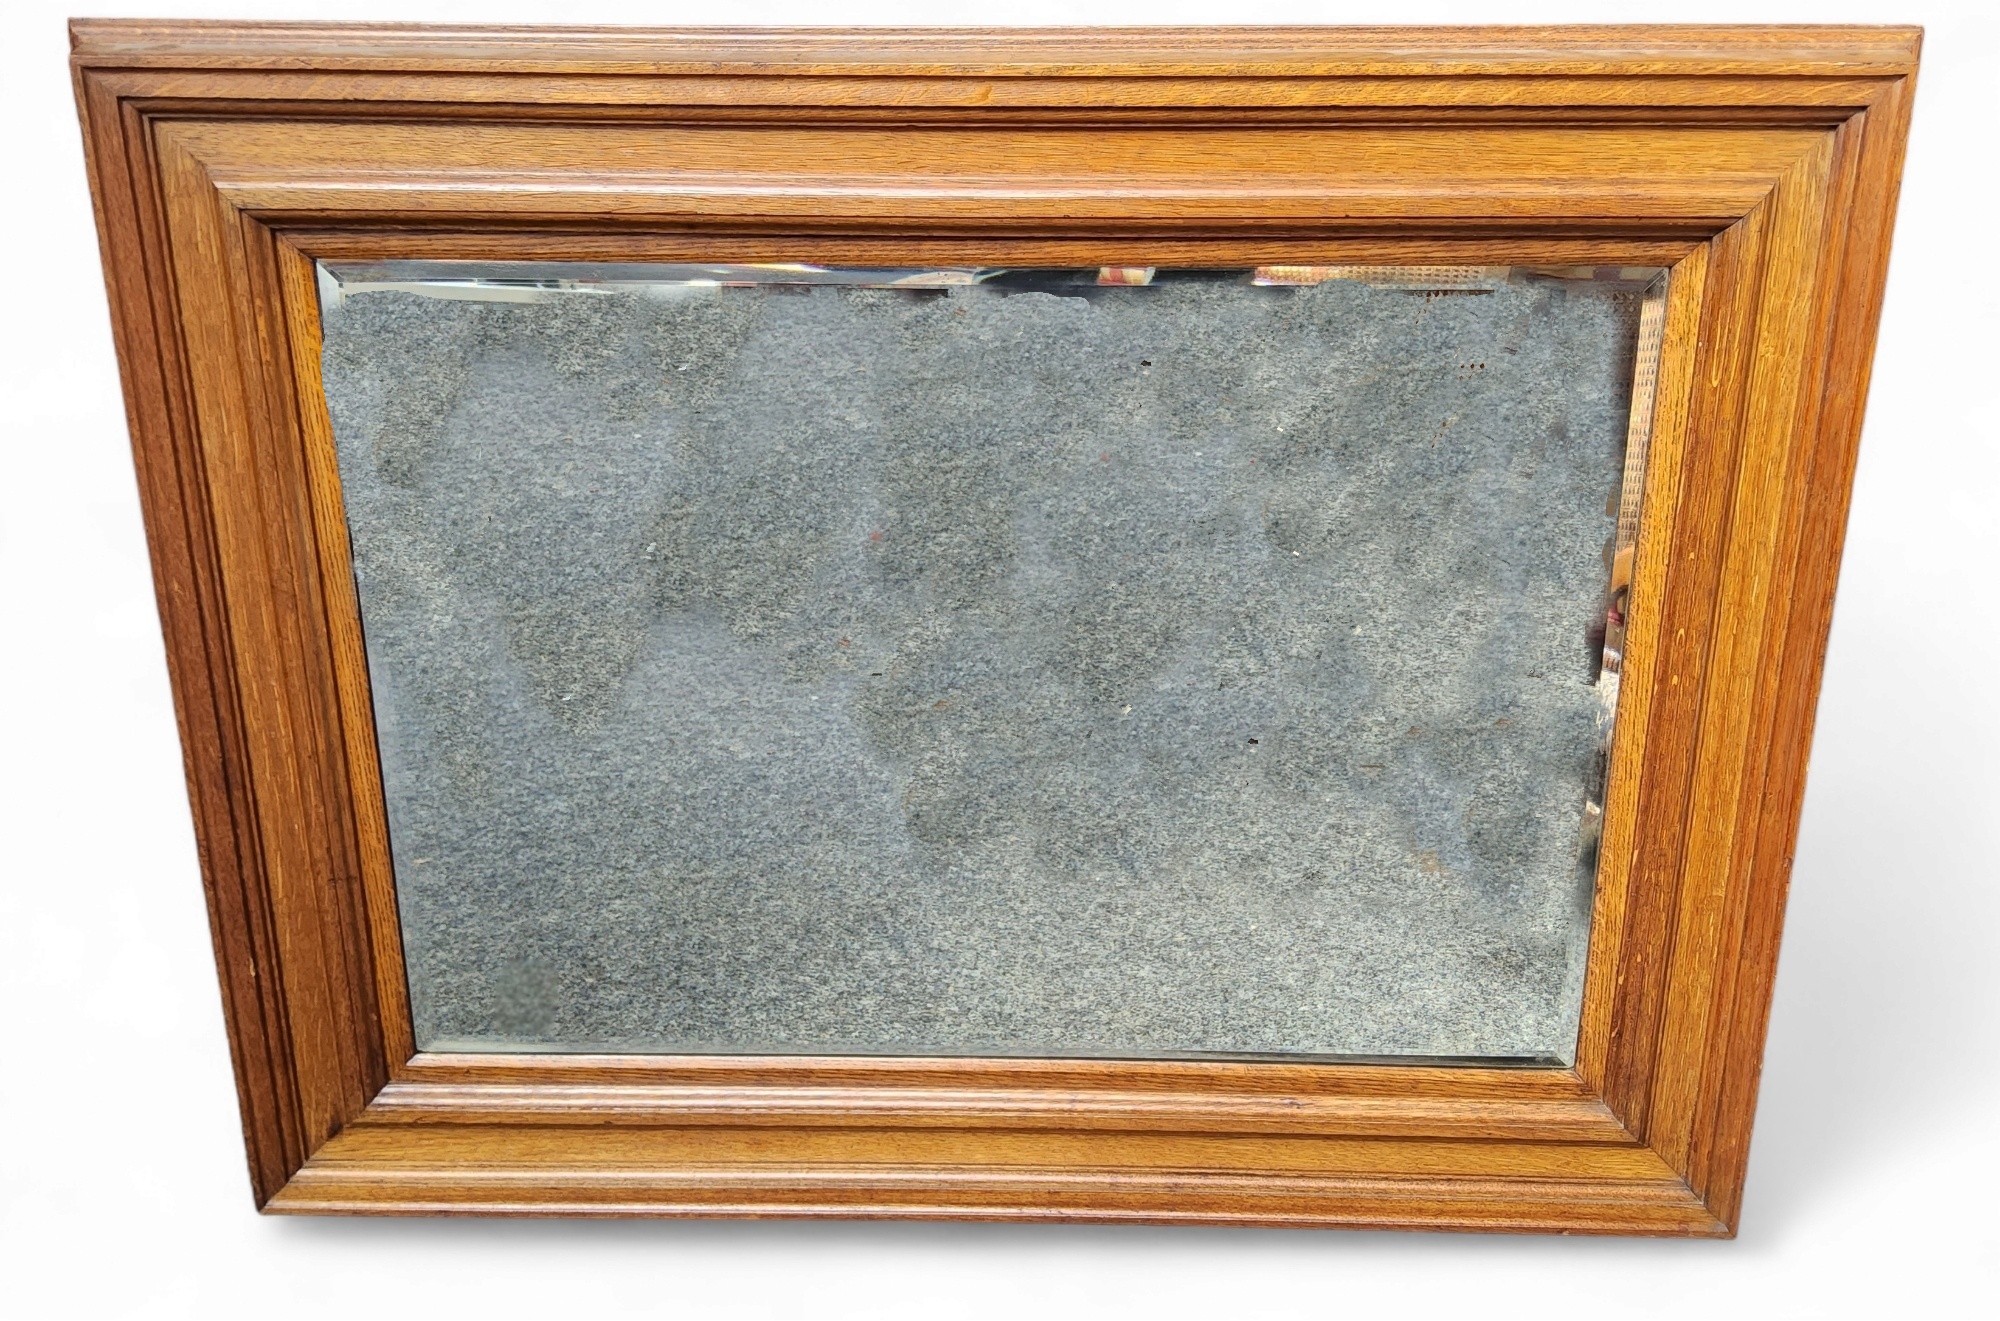 An early 20th century golden oak rectangular bevelled  mirror, stepped frame, fielded panel frame,